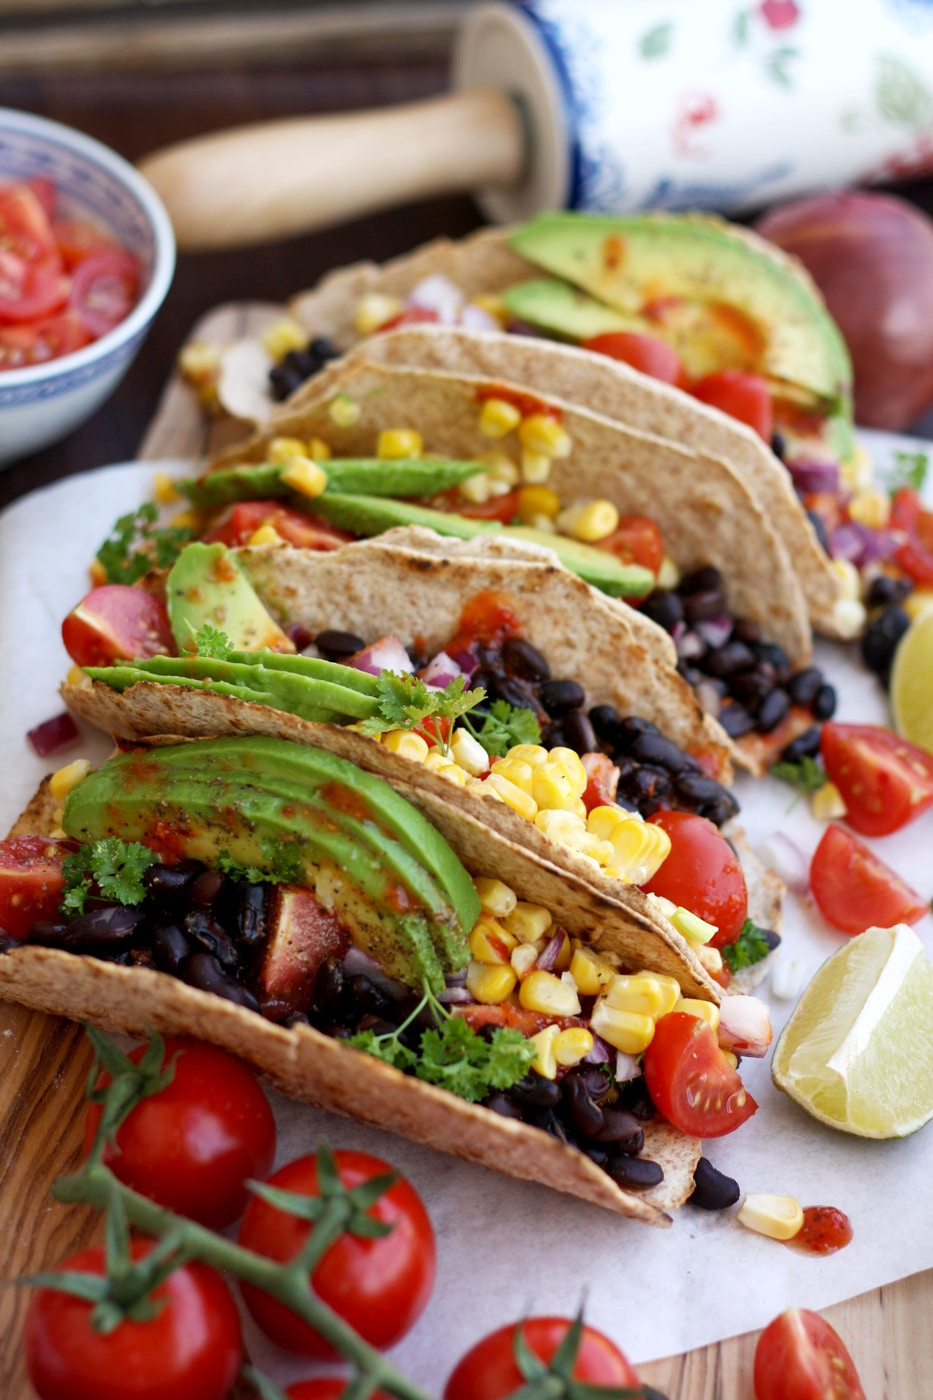 Easy Vegan Recipes Healthy
 5 minute Easy Vegan Tacos • Happy Kitchen